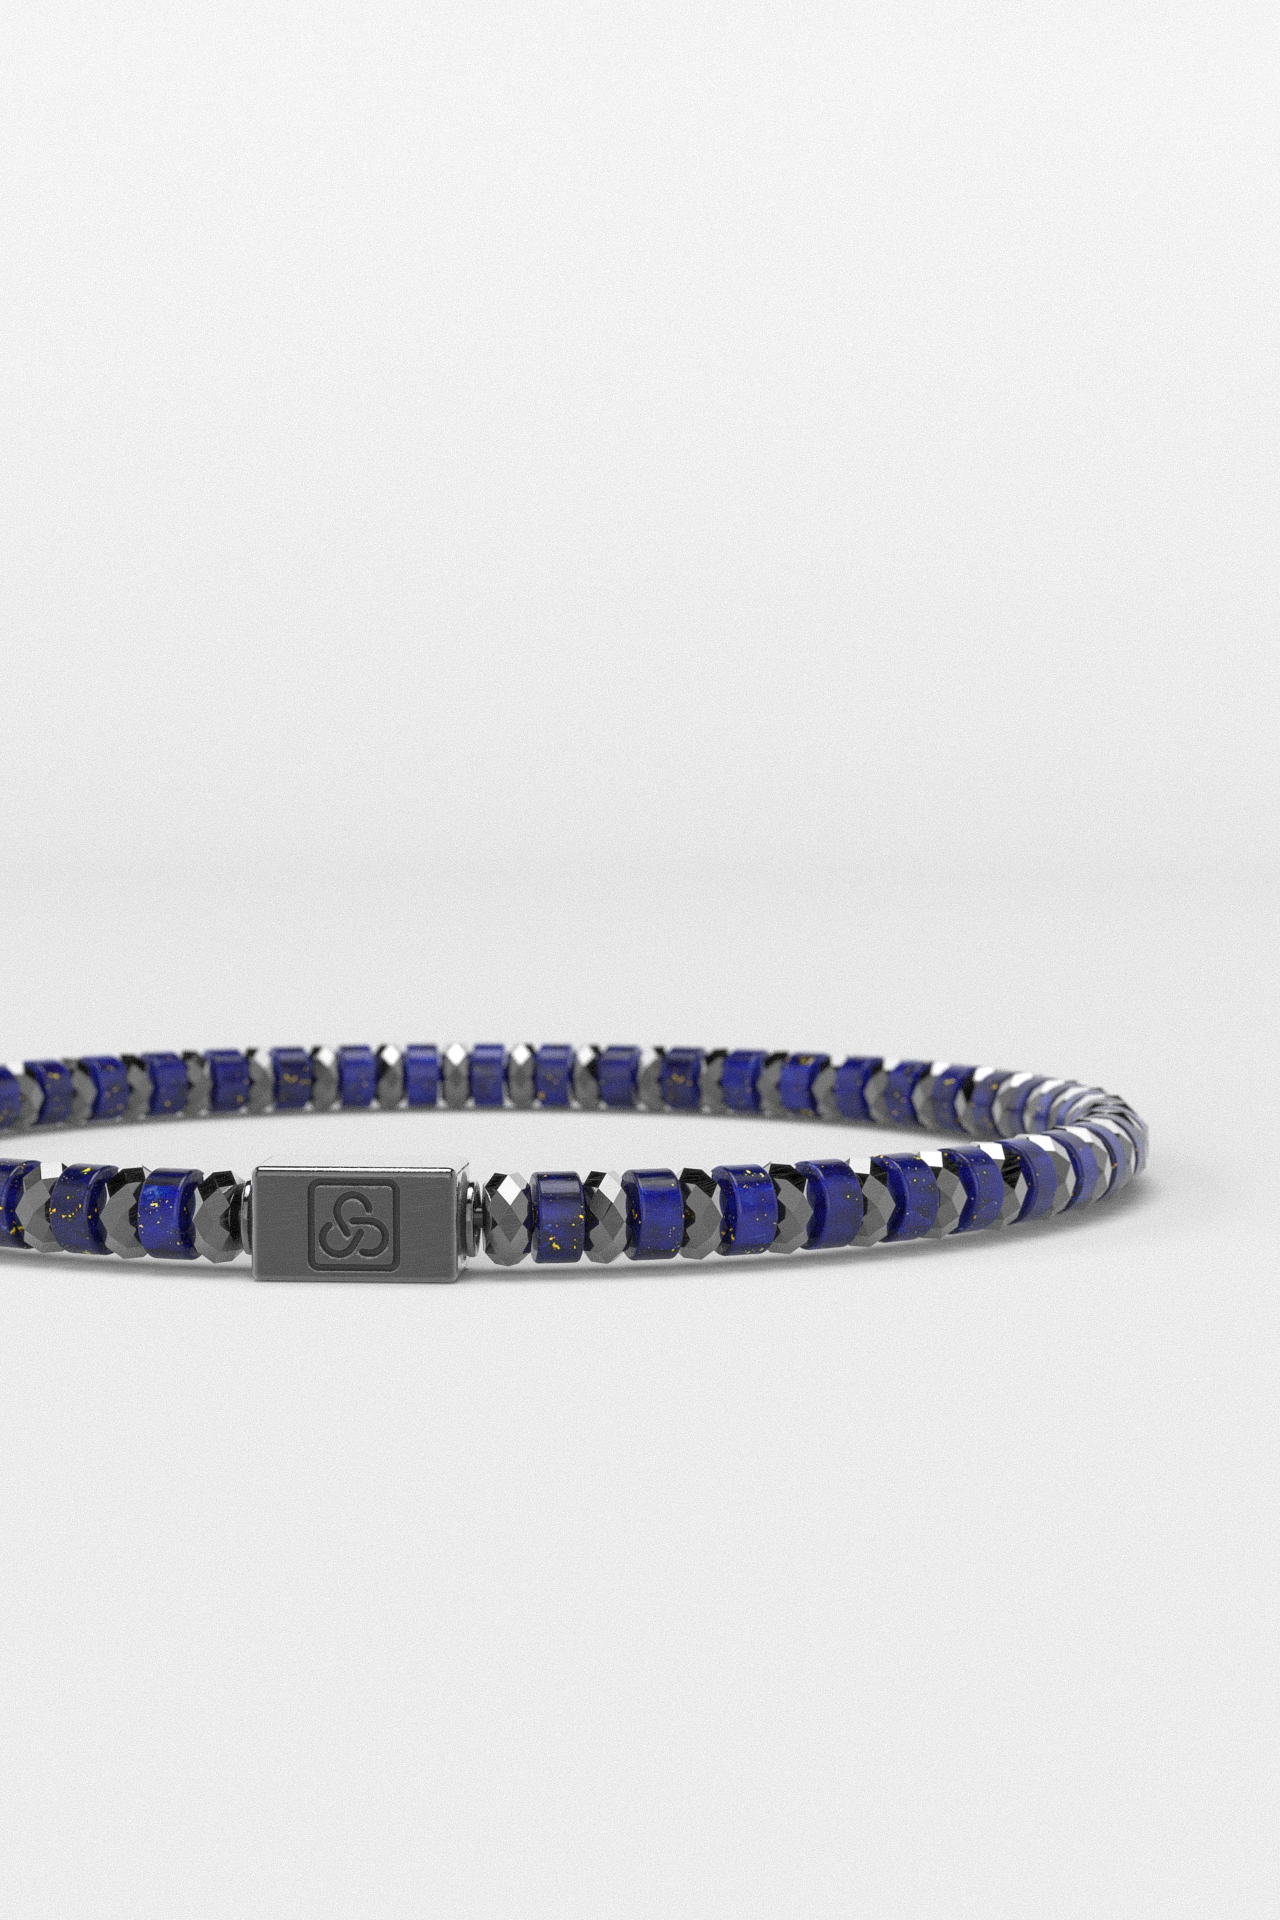 Lapis Lazuli Bracelet 4mm | Spacer